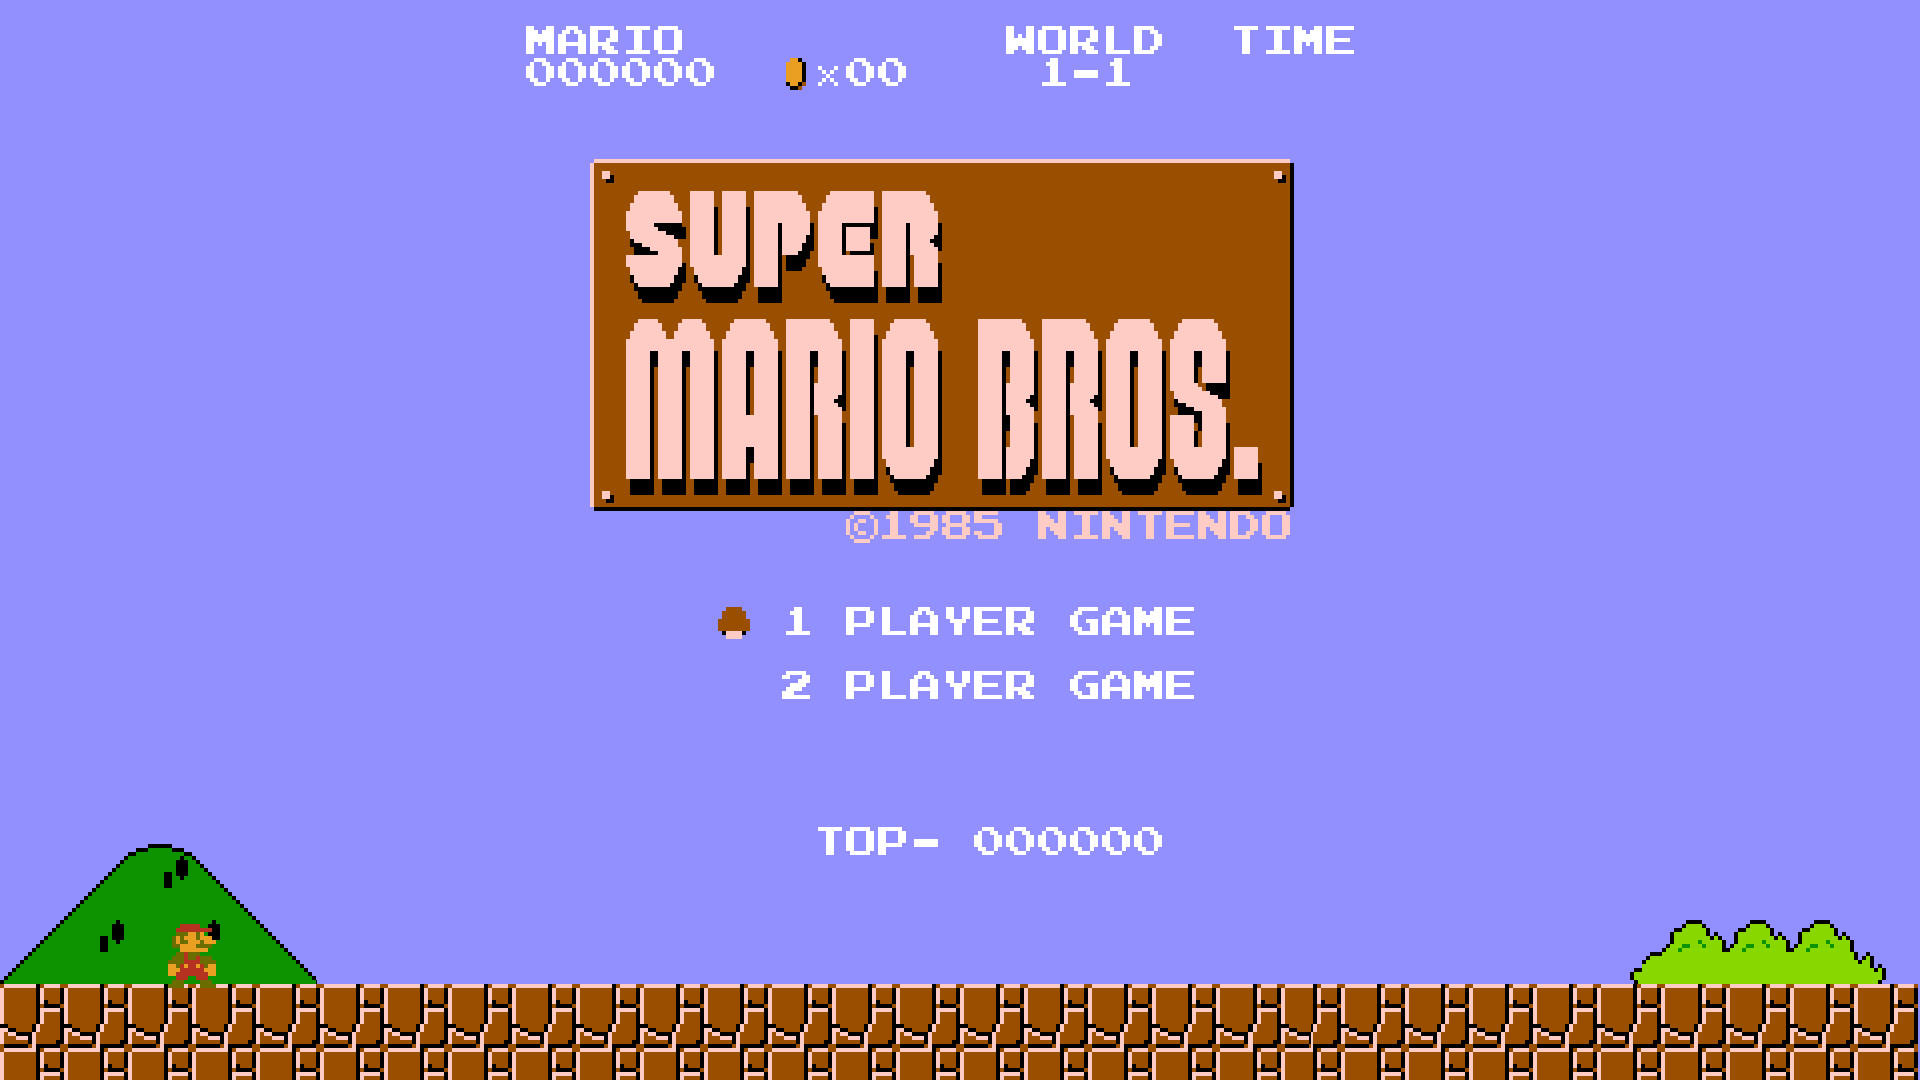 Super mario bros game. Братья Марио игра 1983. Супер Марио игра Денди. Меню Марио игра. Главное меню Марио.